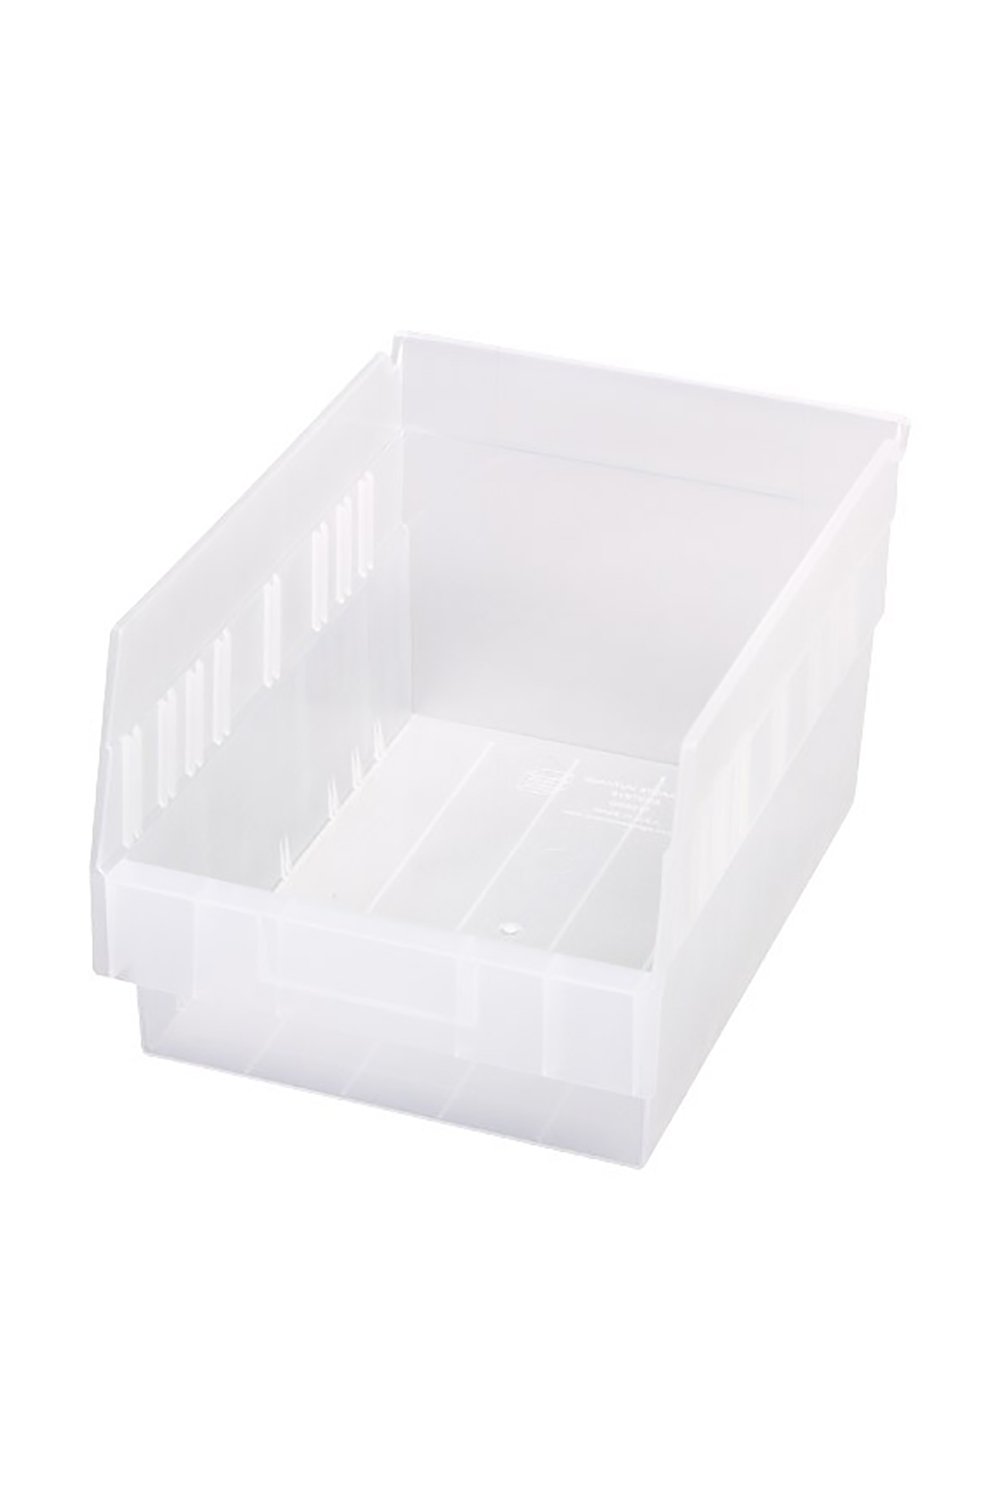 Shelf Bin for 12"D Shelves Bins & Containers Acart 11-5/8" x 8-3/8" x 6" Clear 